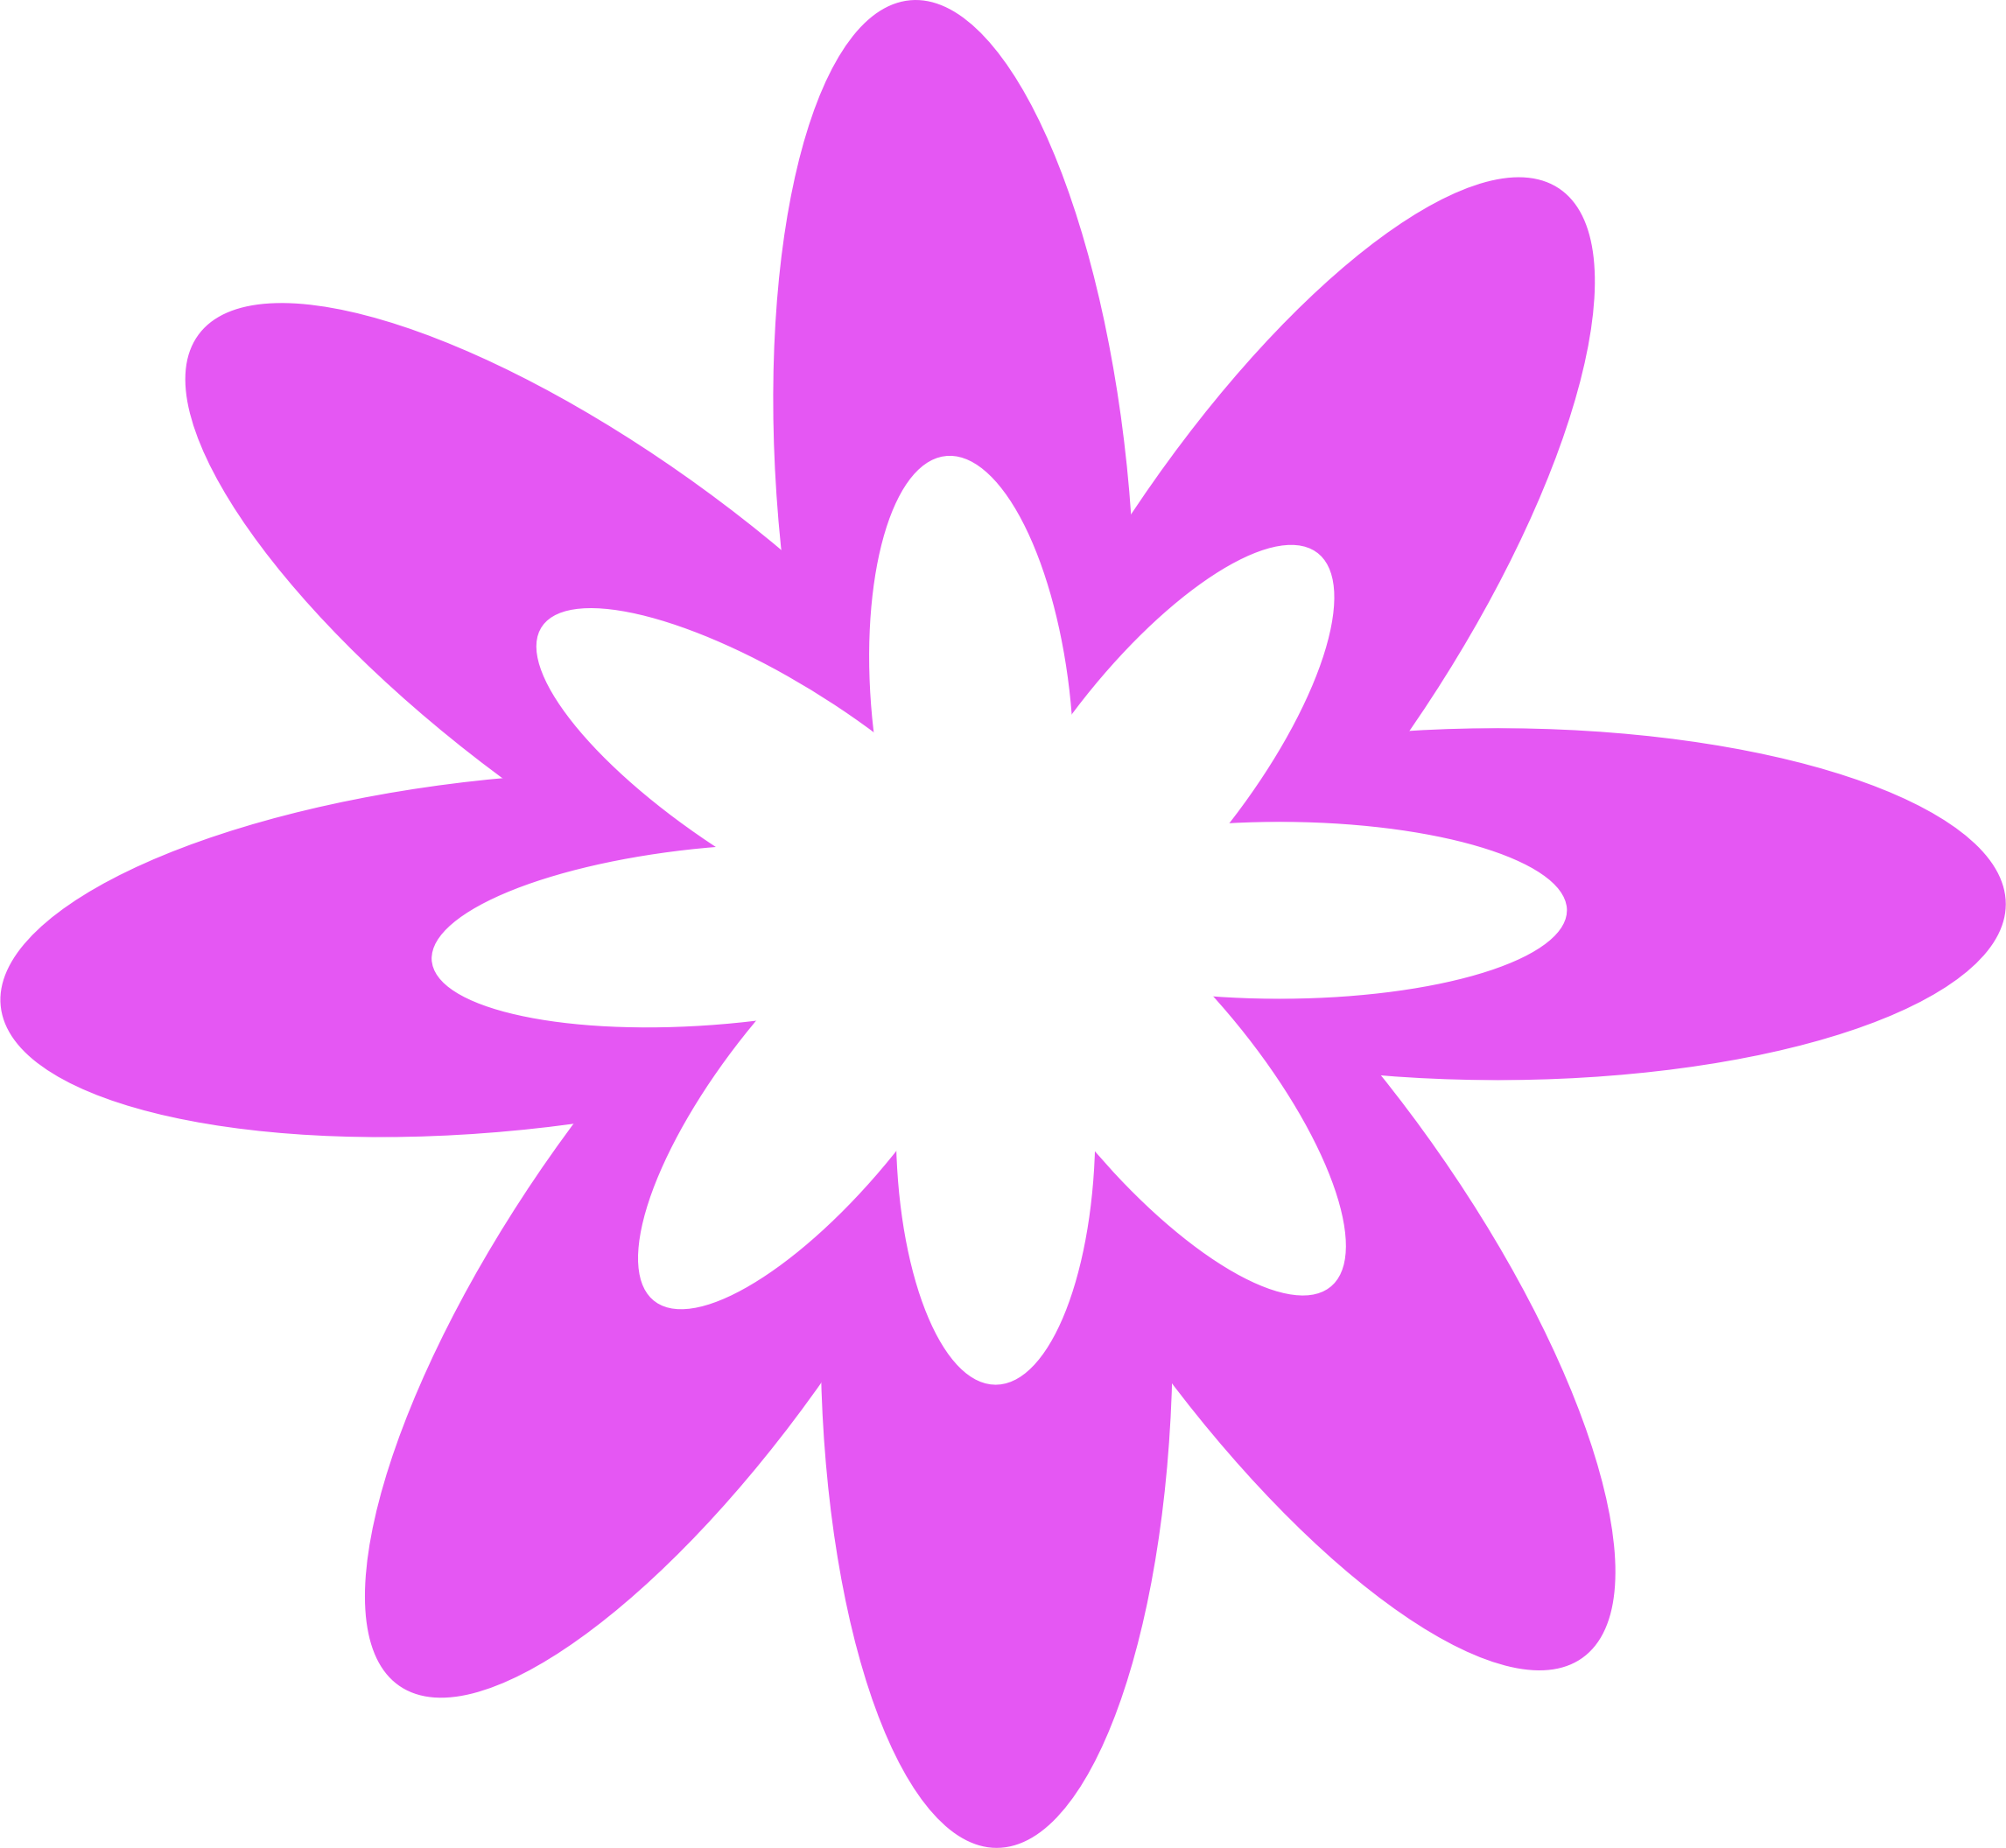 Clipart explosion purple. Burst flower icons png